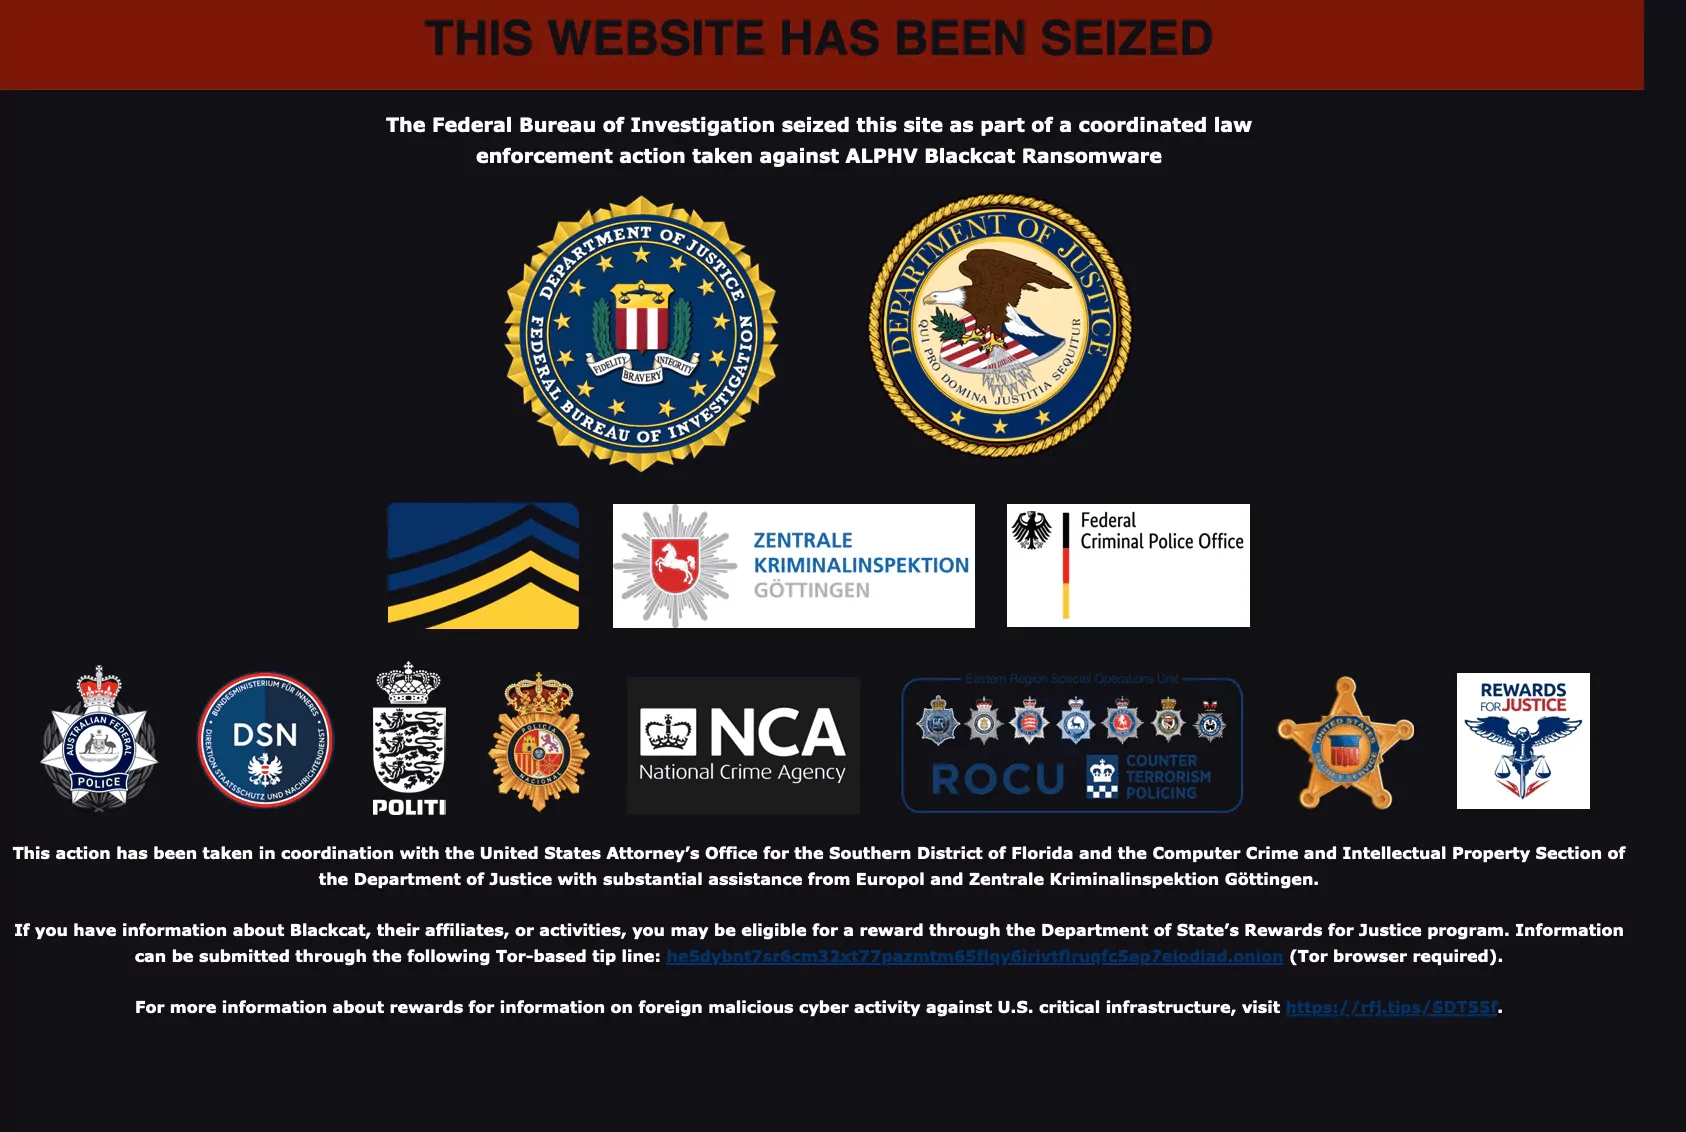 FBI’s seizure announcement of ALPHV domains